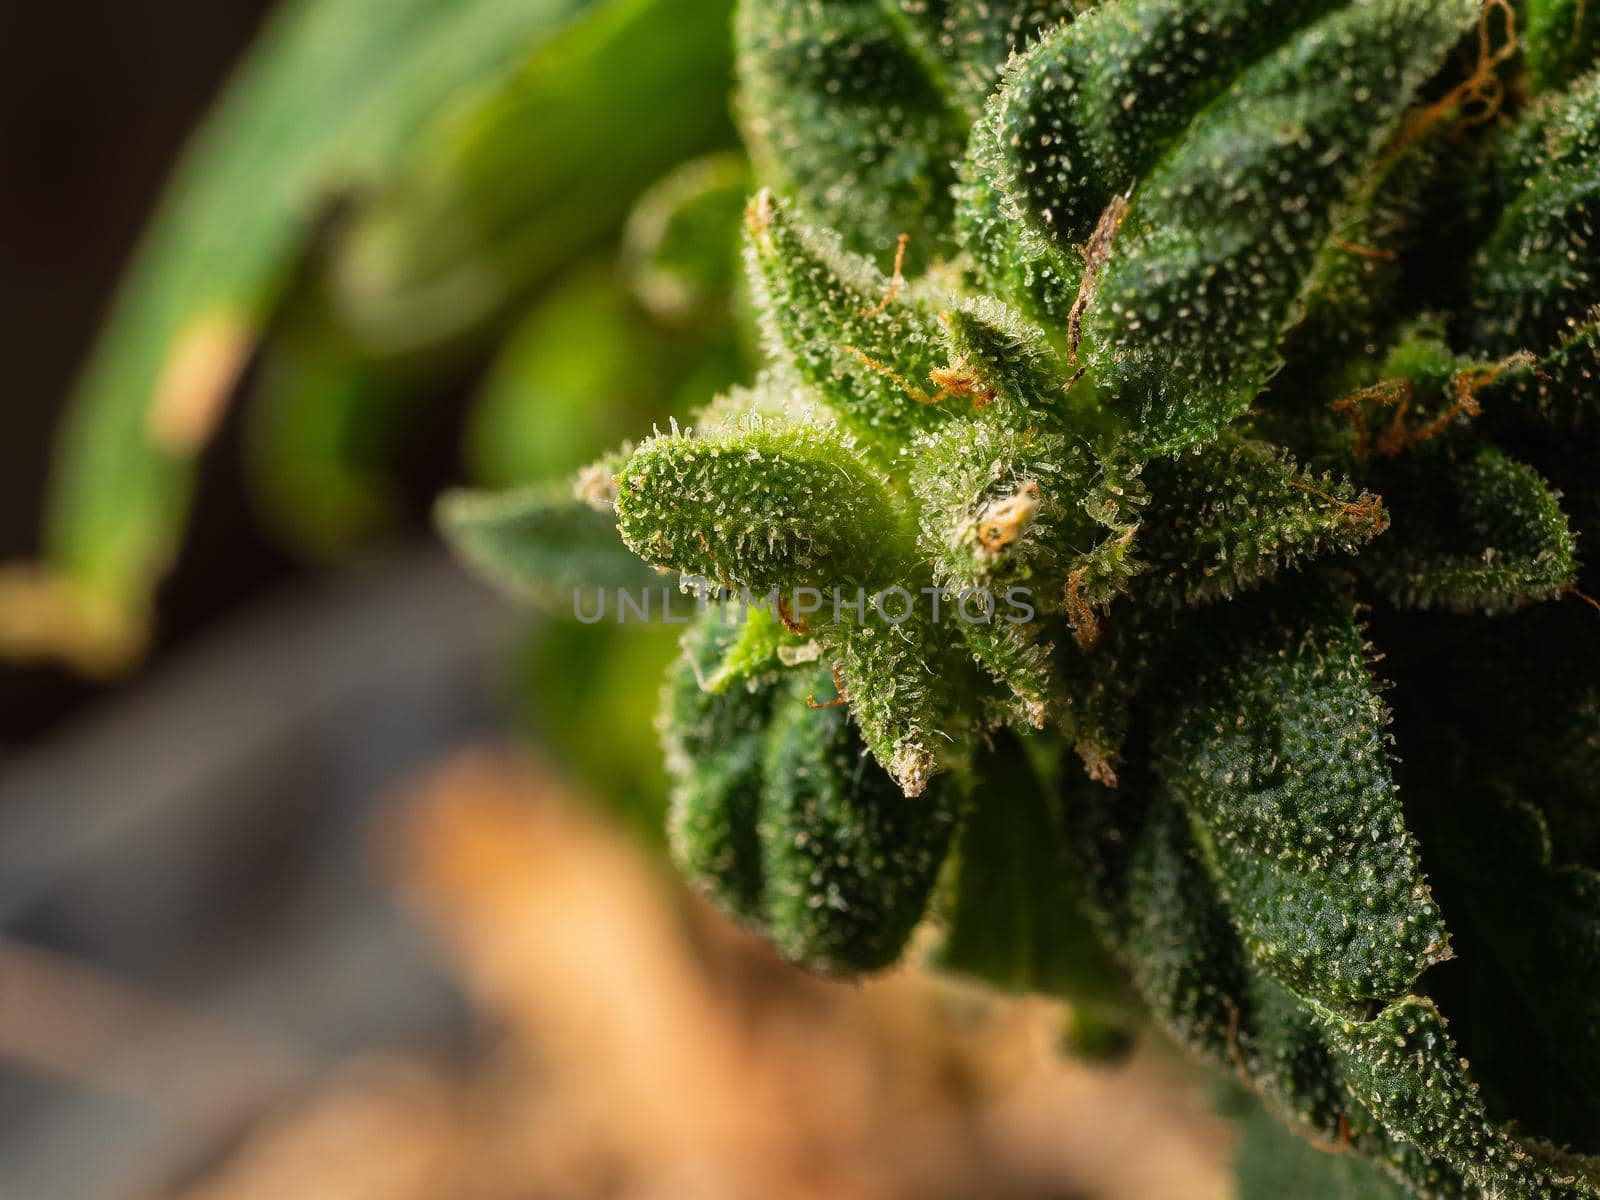 Blooming marijuana plant with trichomes, cannabis leaves, marijuana close-up.